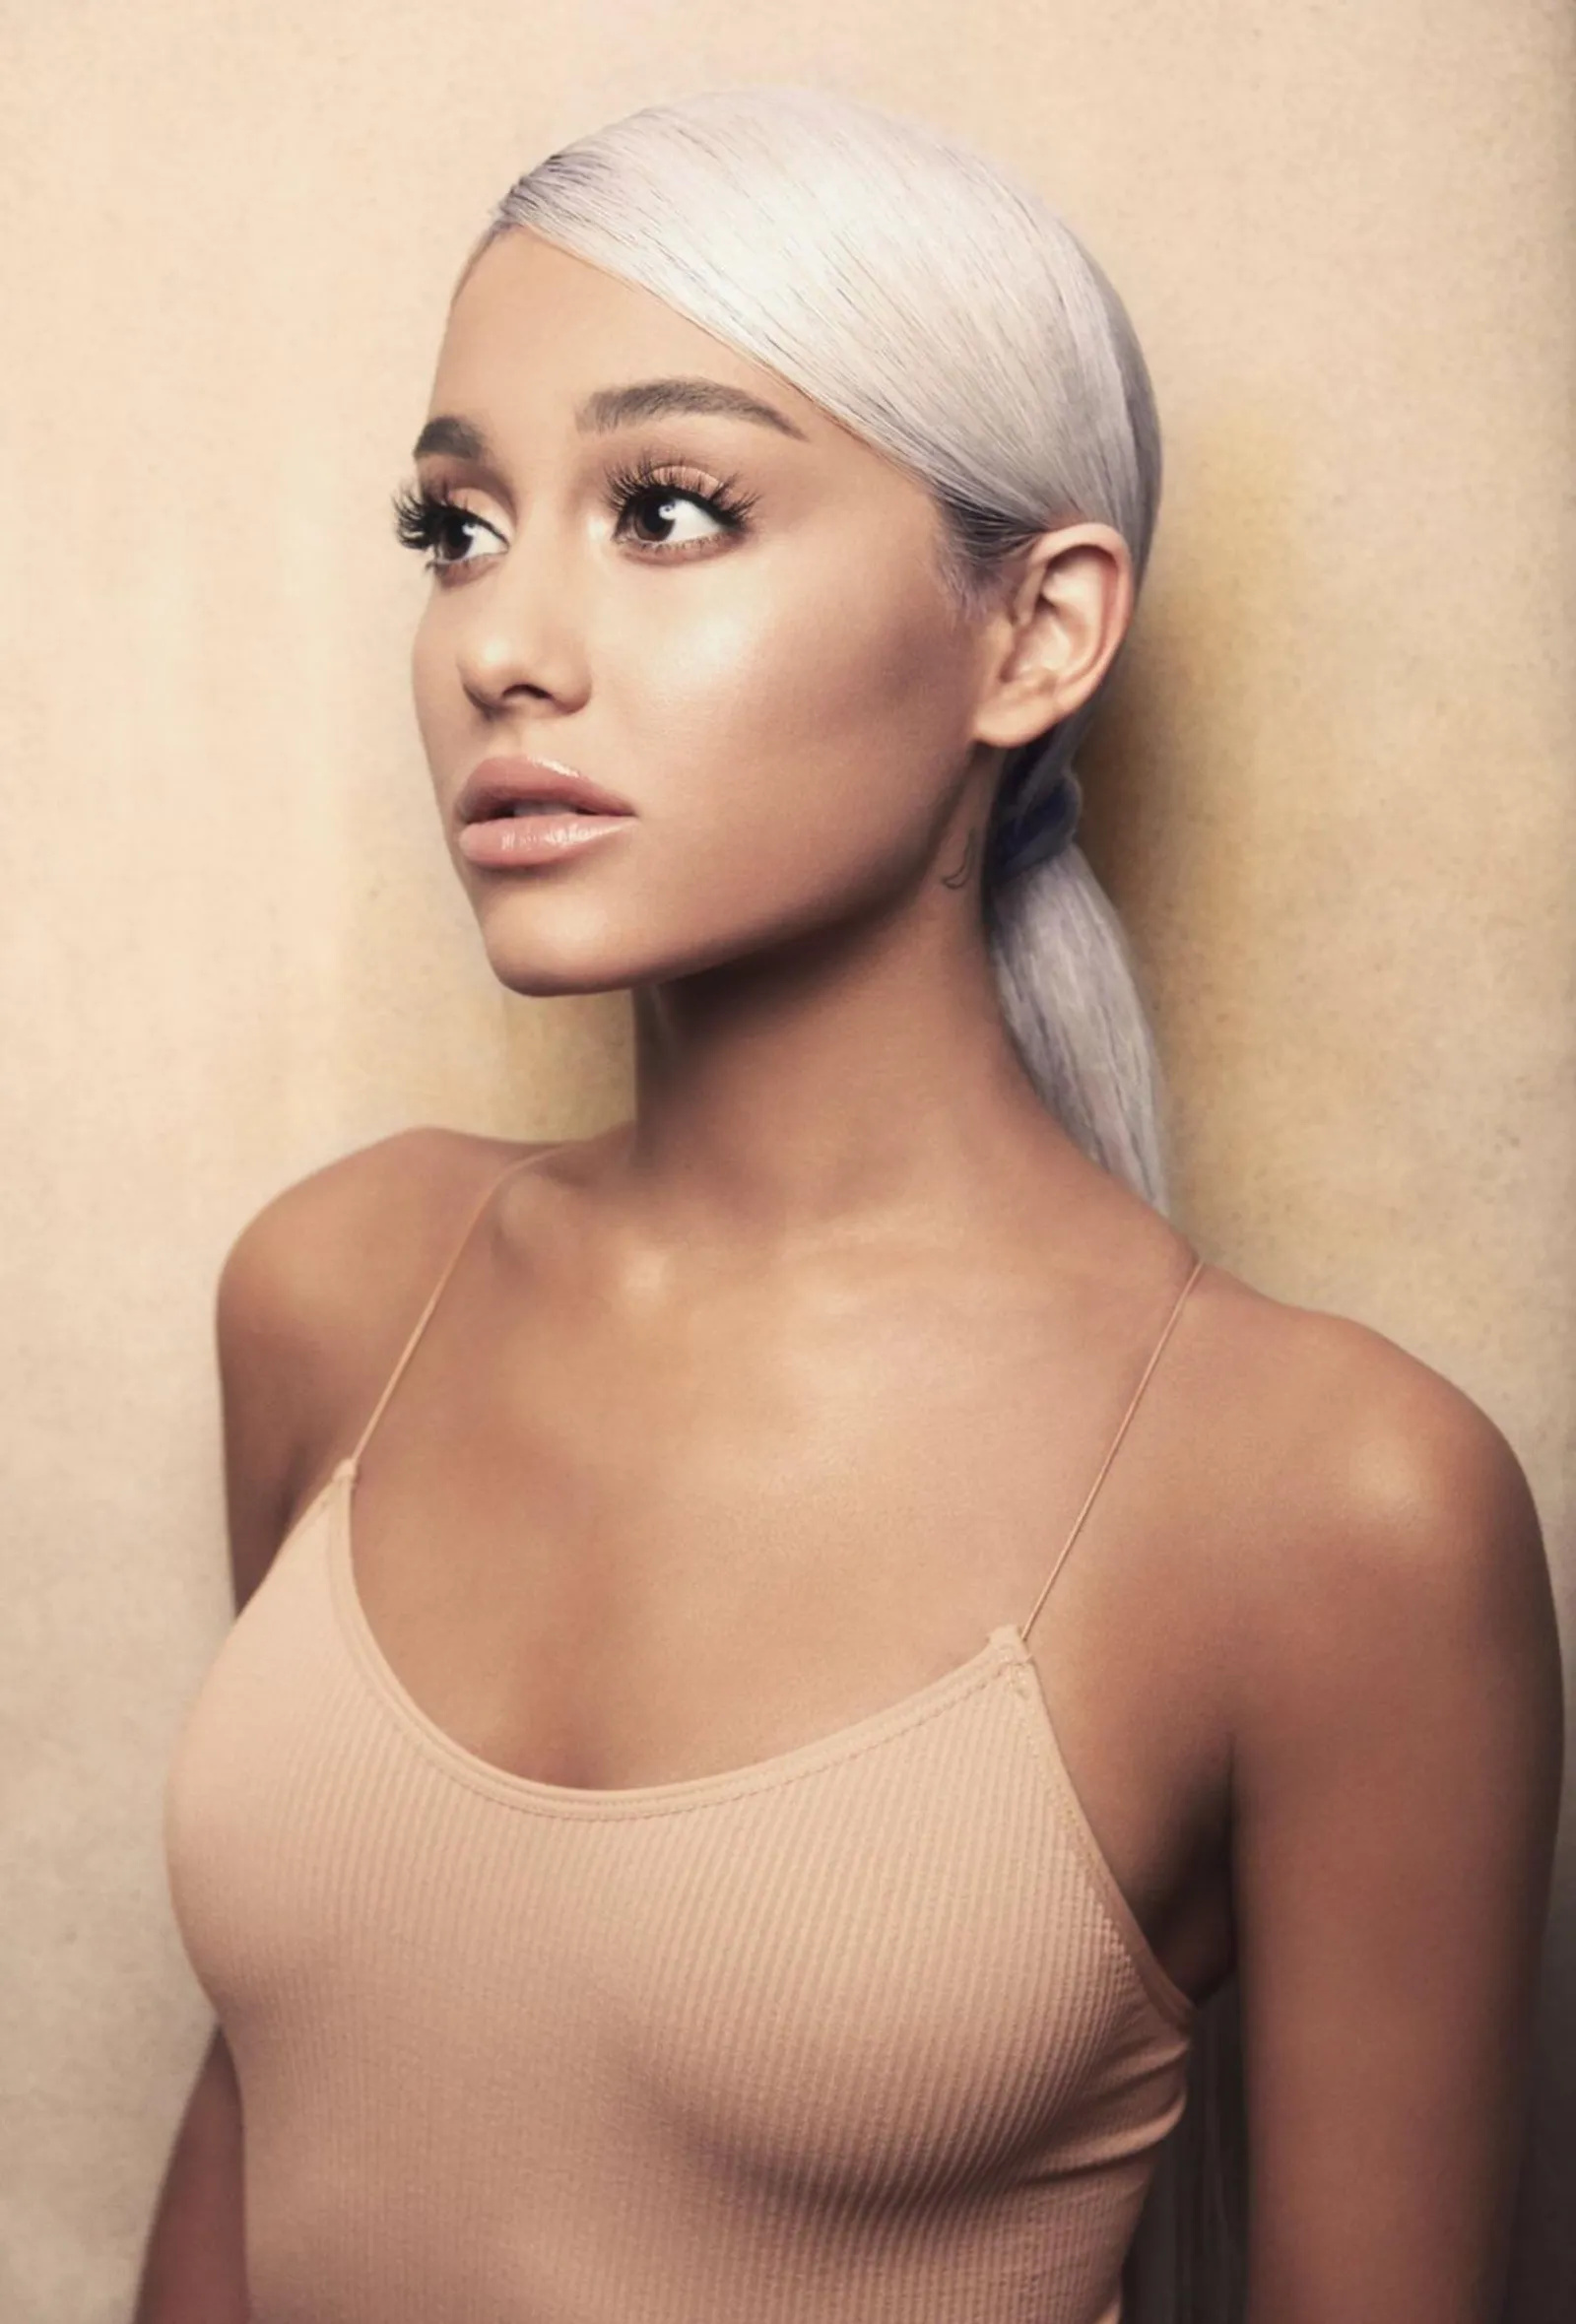 Perubahan Gaya Ariana Grande di Cover Album Dulu hingga Sekarang